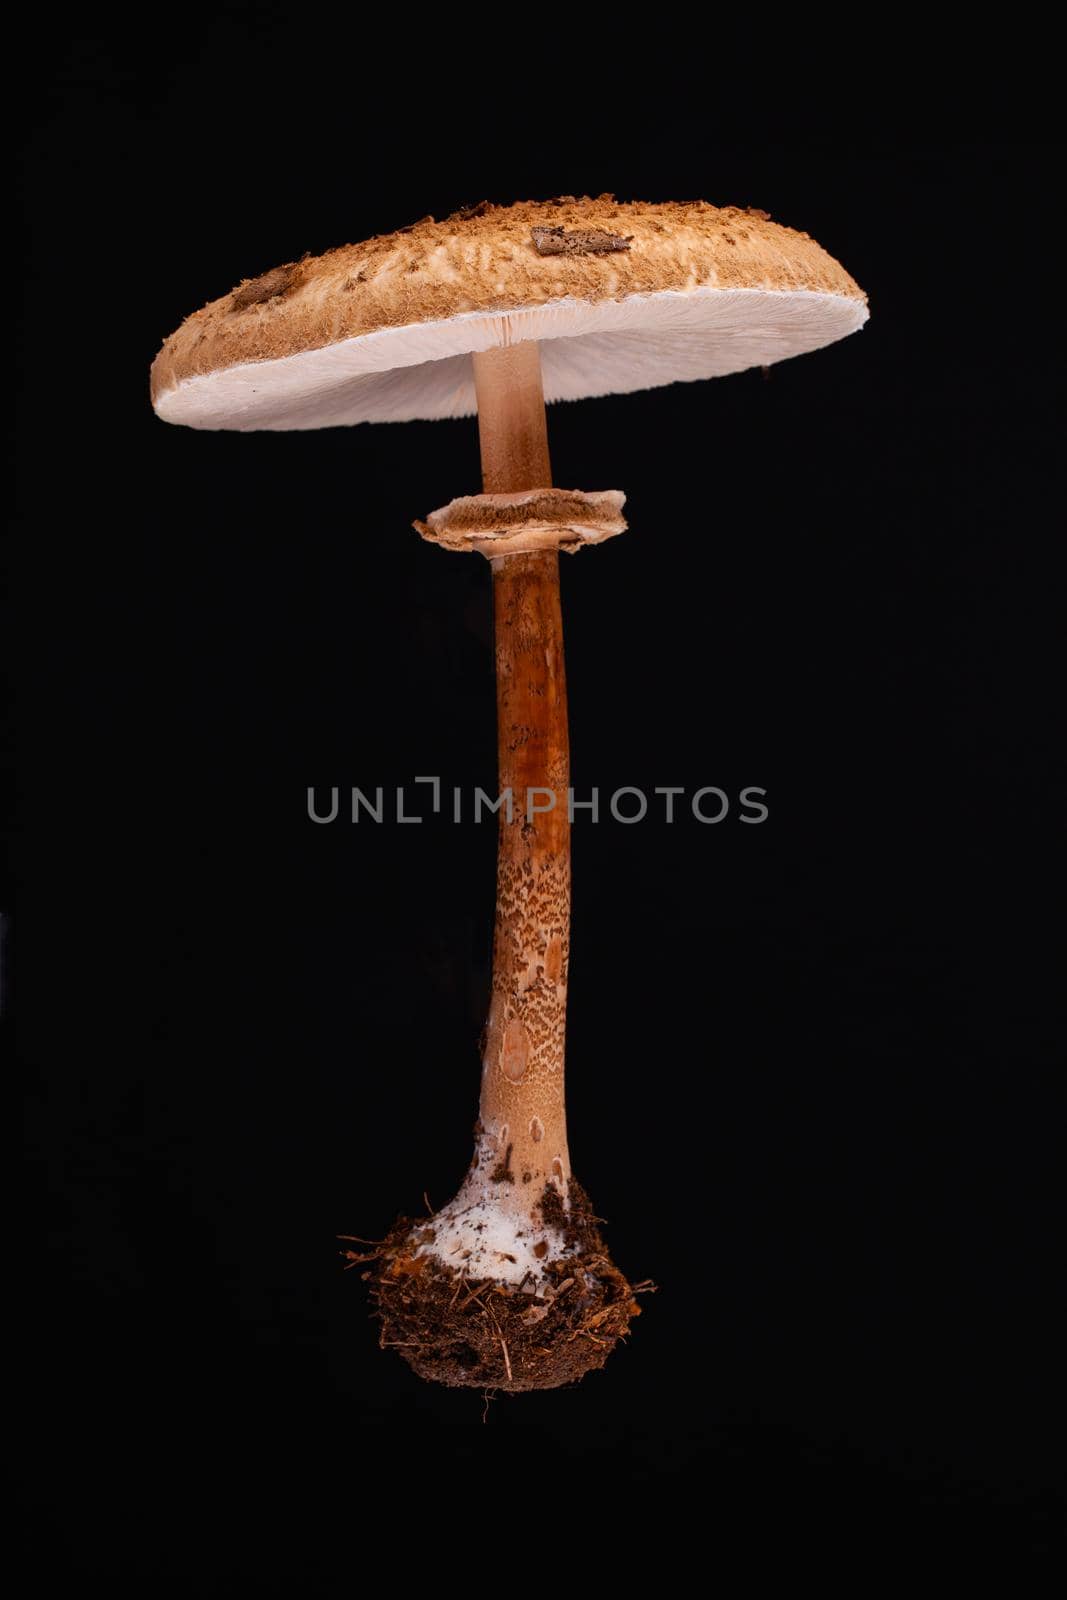 One levitating parasol mushroom (macrolepiota procera) by CaptureLight